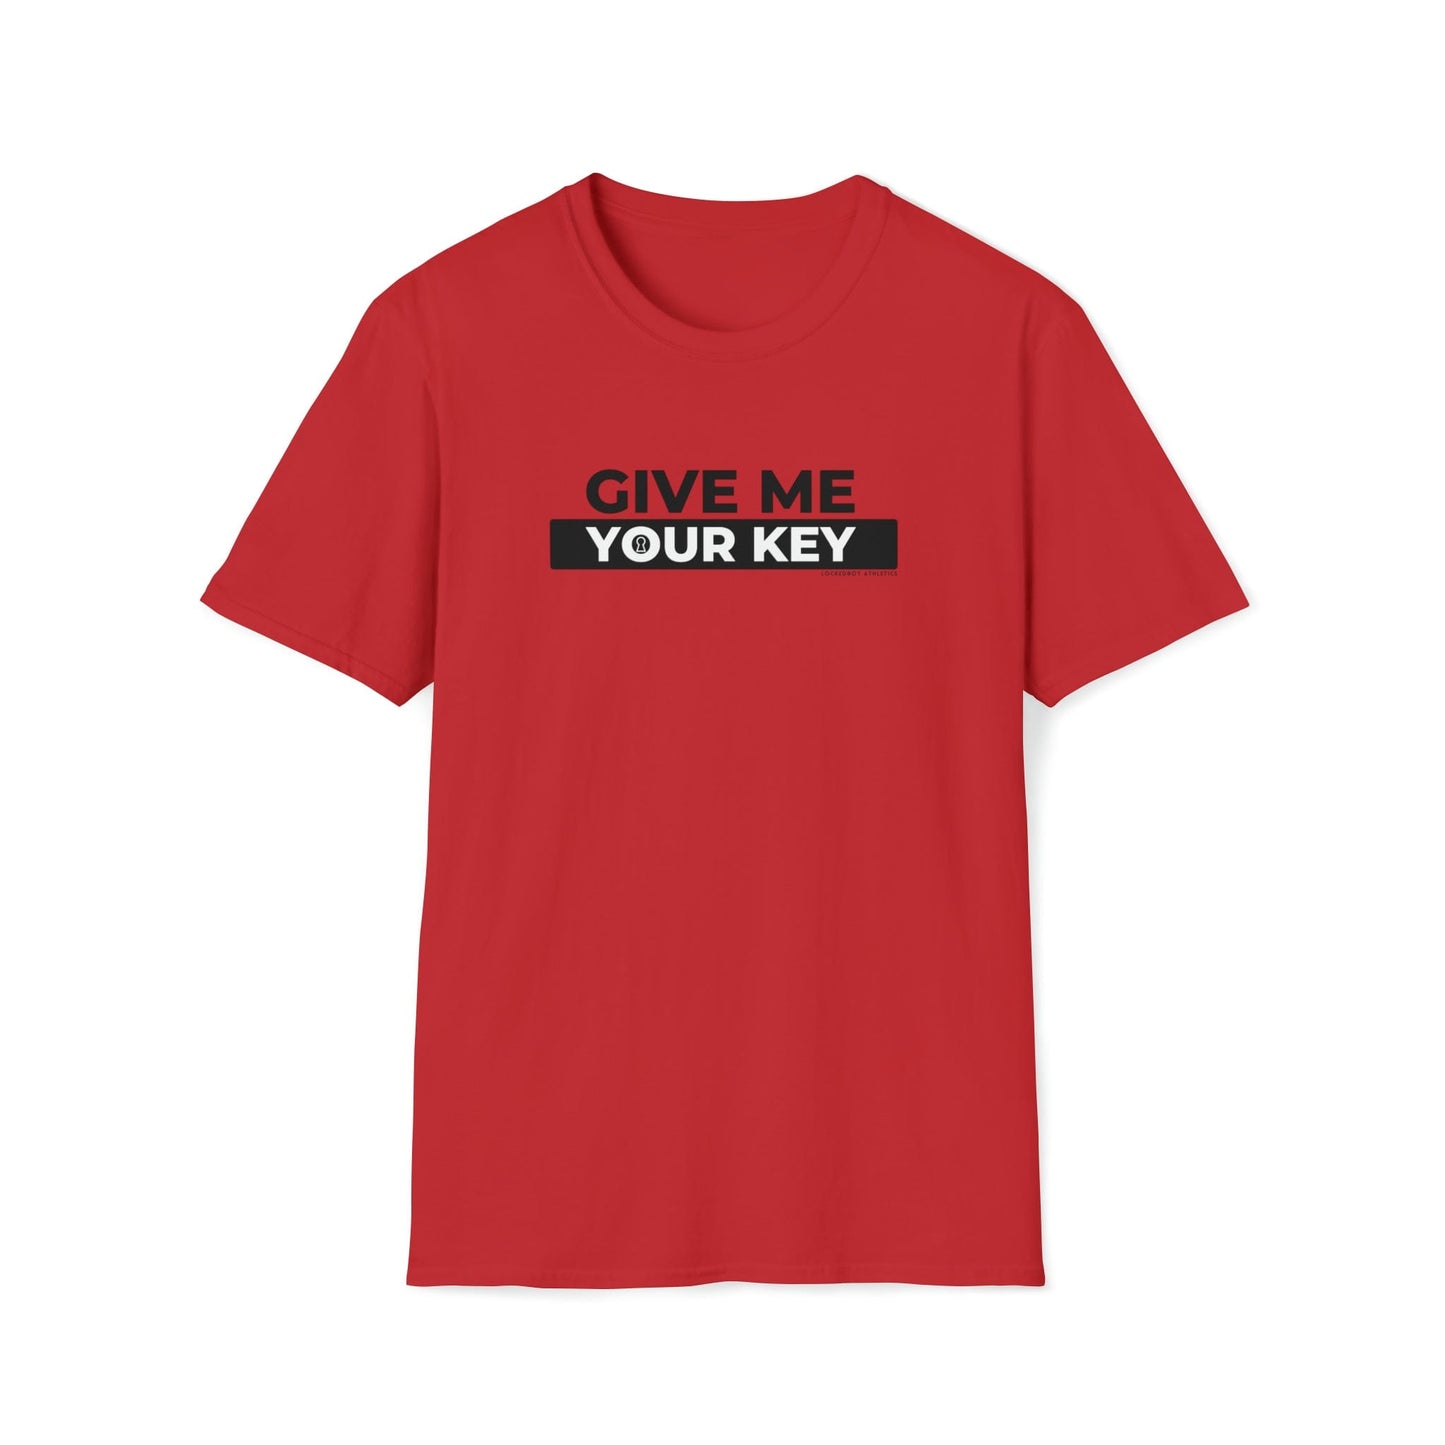 T-Shirt Red / S Give Me Your Key - Chastity Shirts by LockedBoy Athletics LEATHERDADDY BATOR